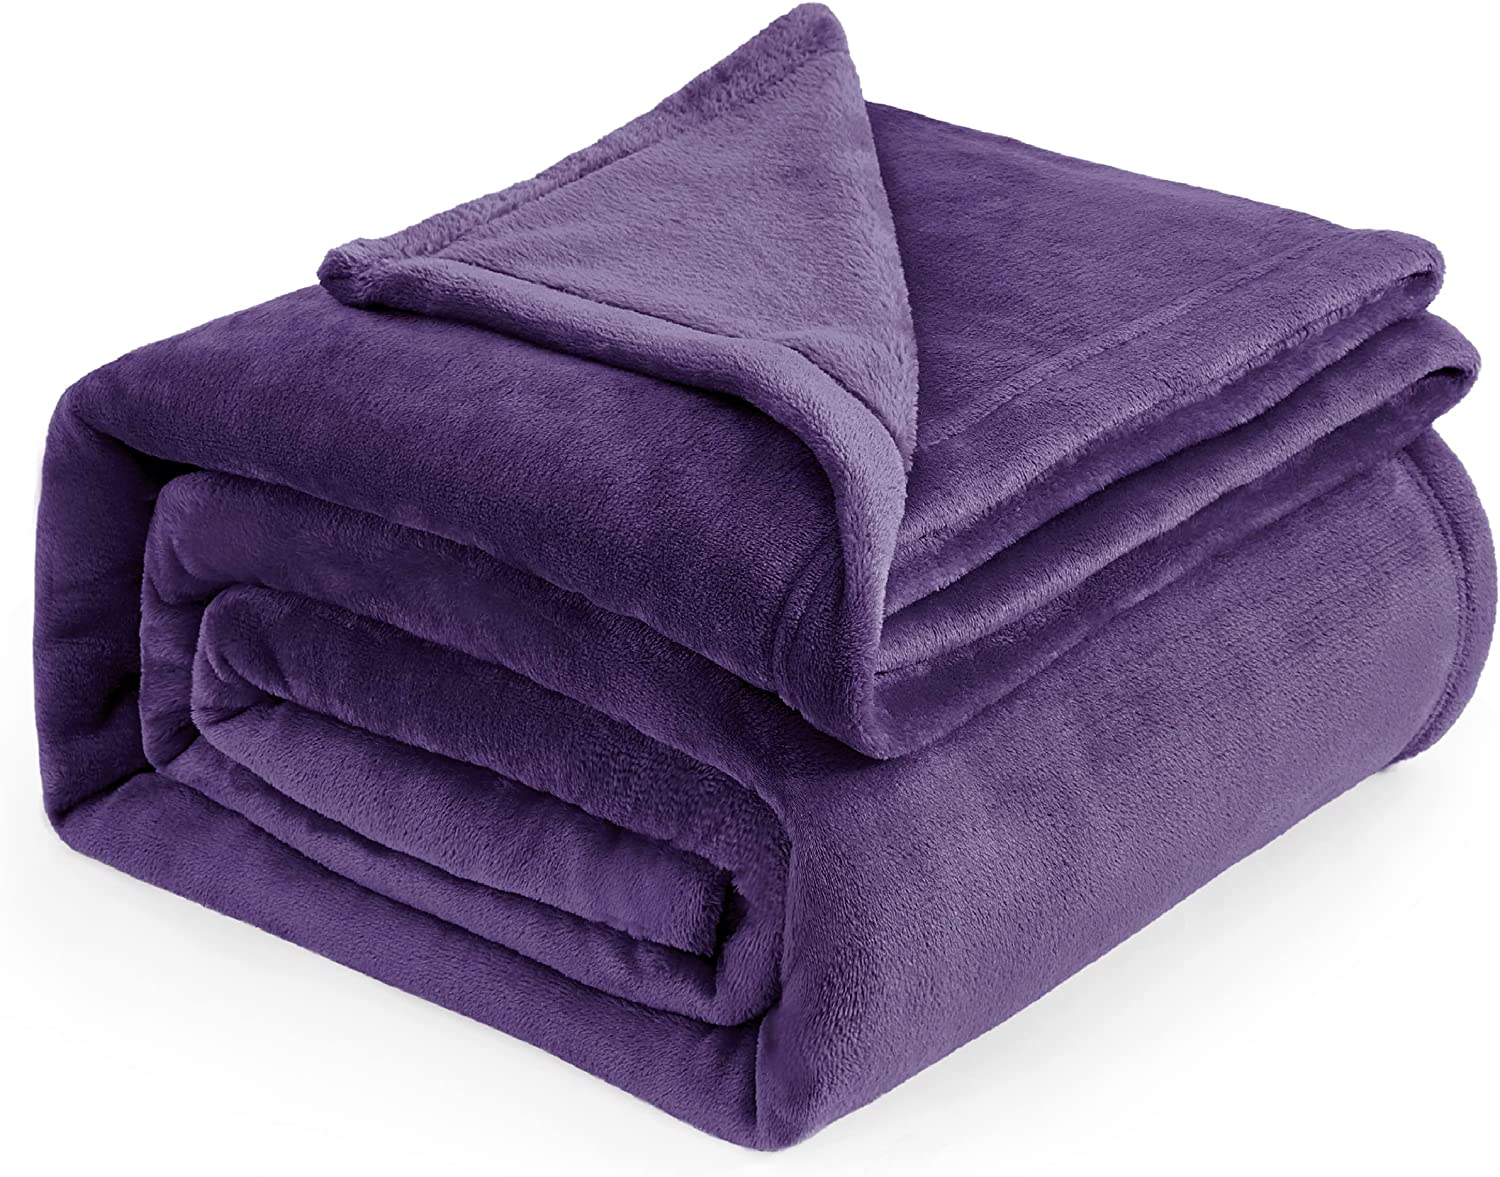 BEDSURE Fleece Throw Blanket for Couch Grey - Lightweight Plush